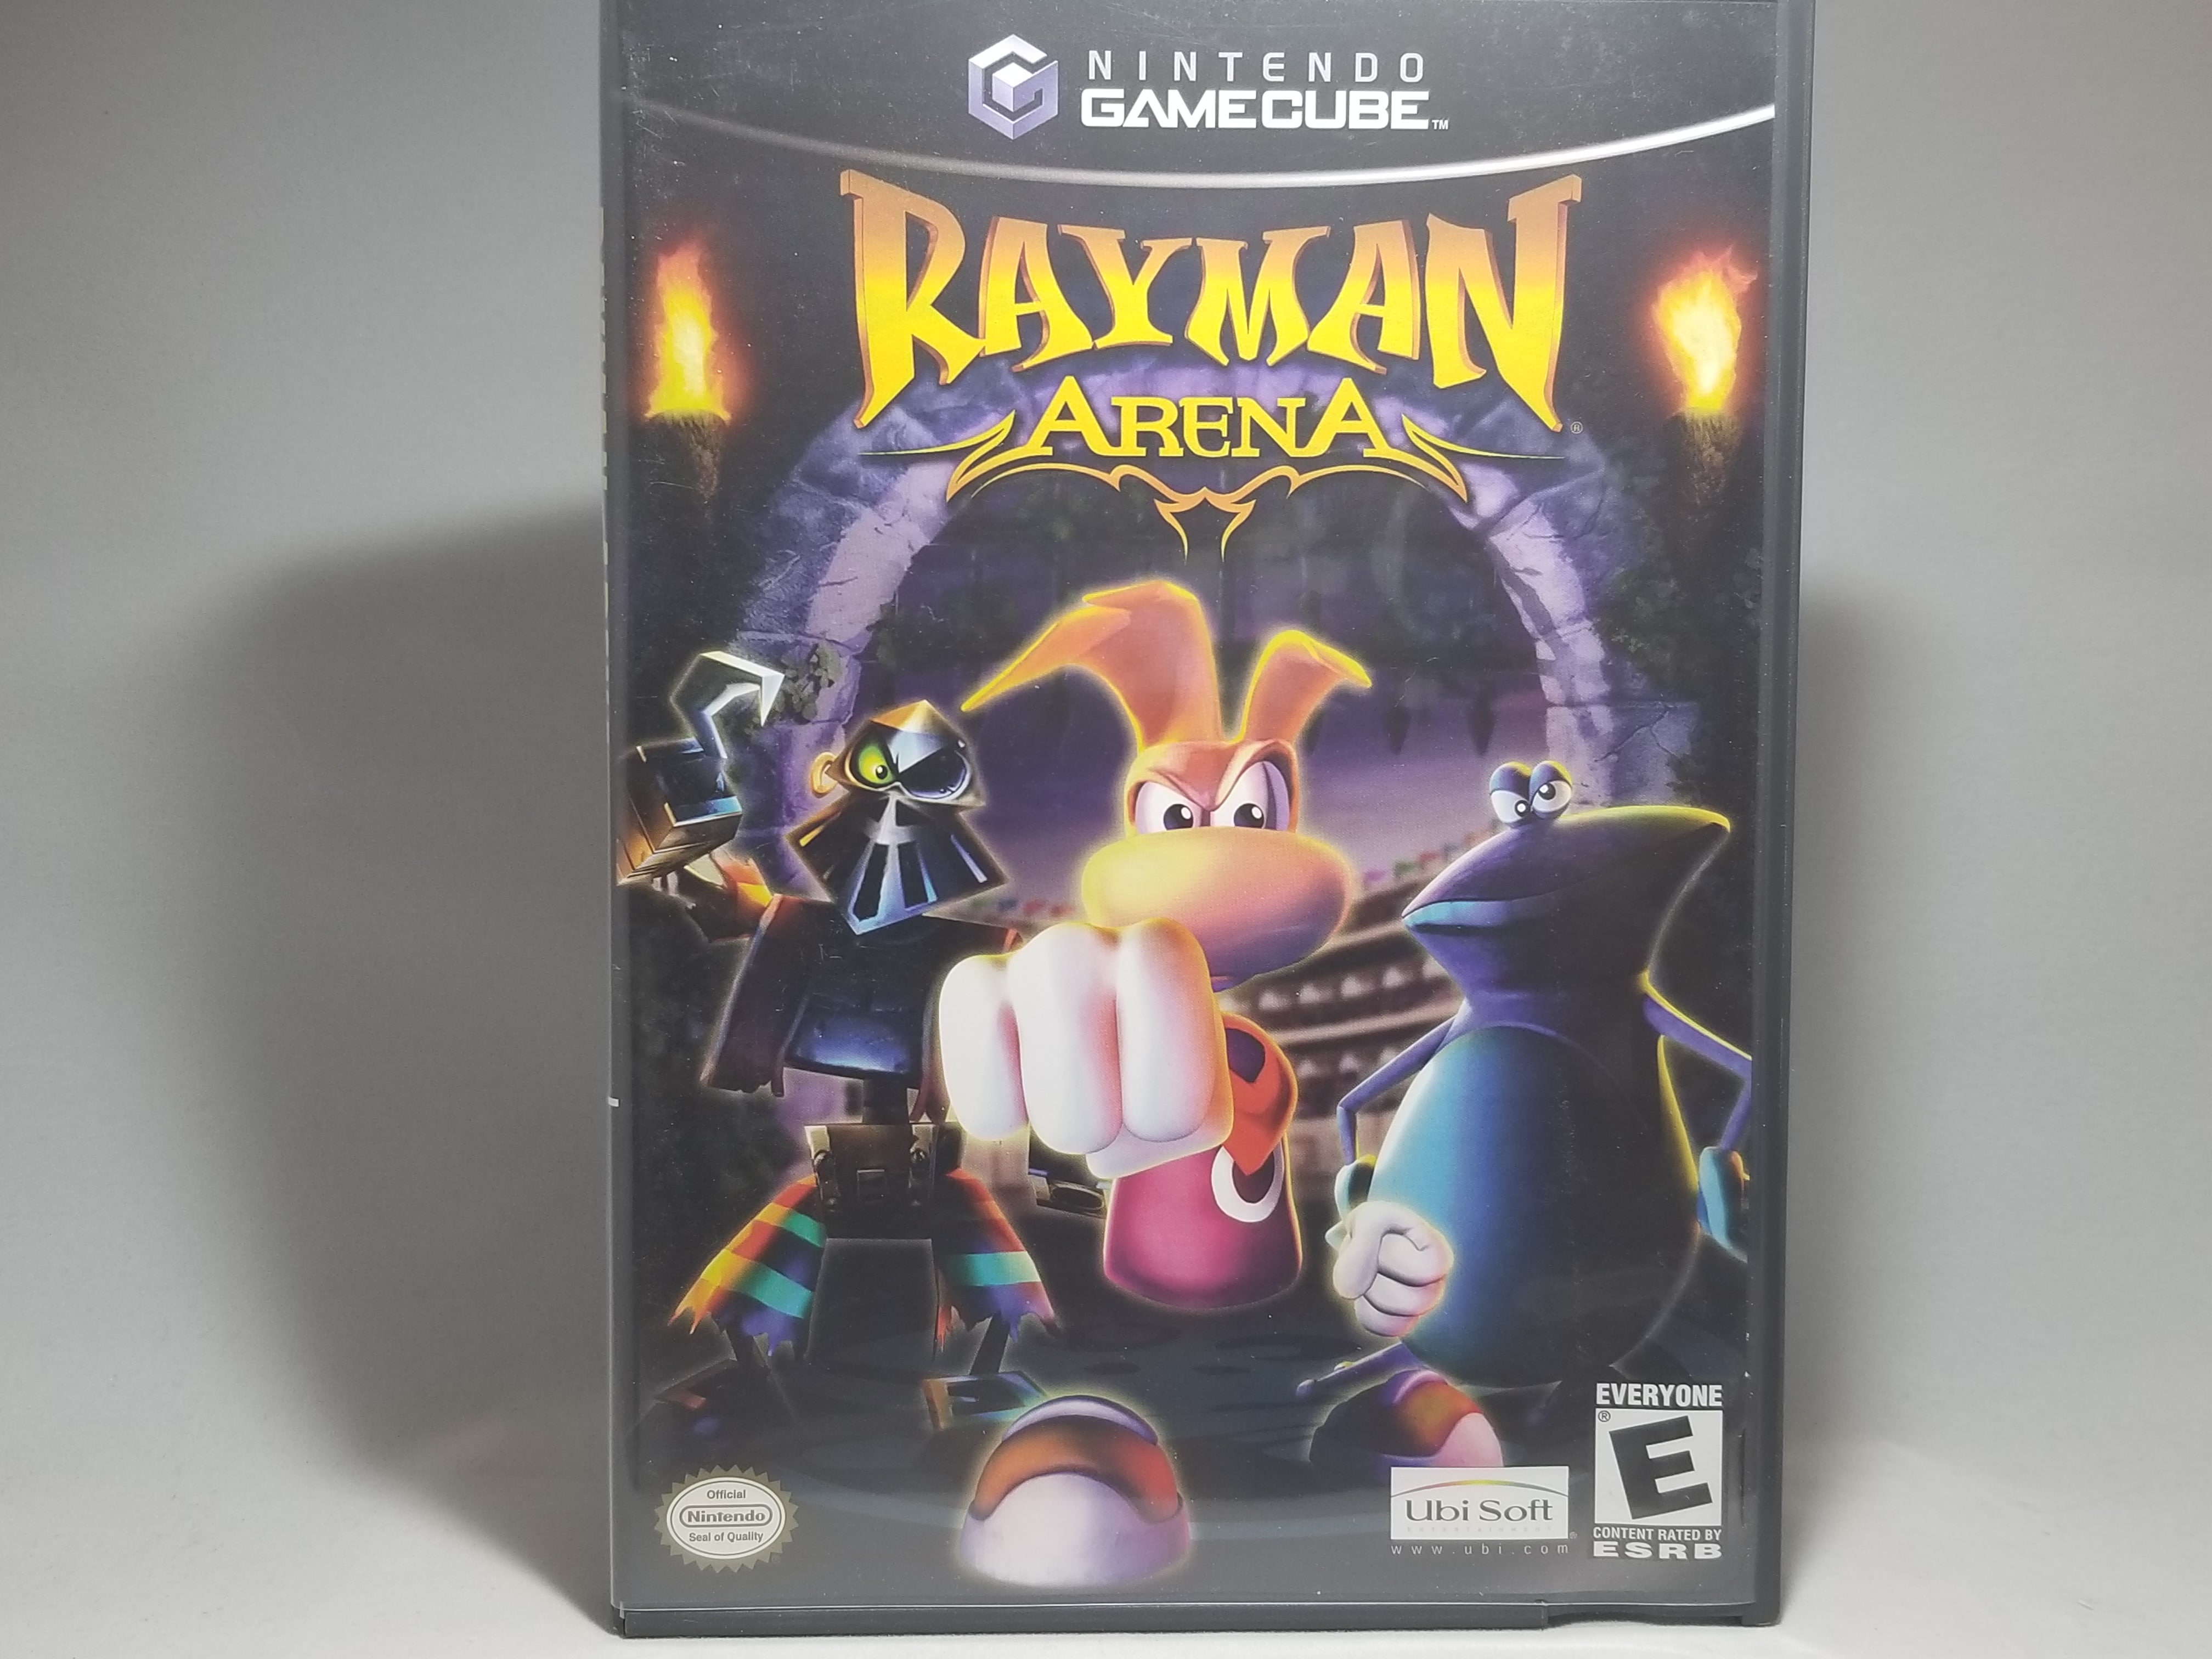 Rayman Arena for Nintendo GameCube